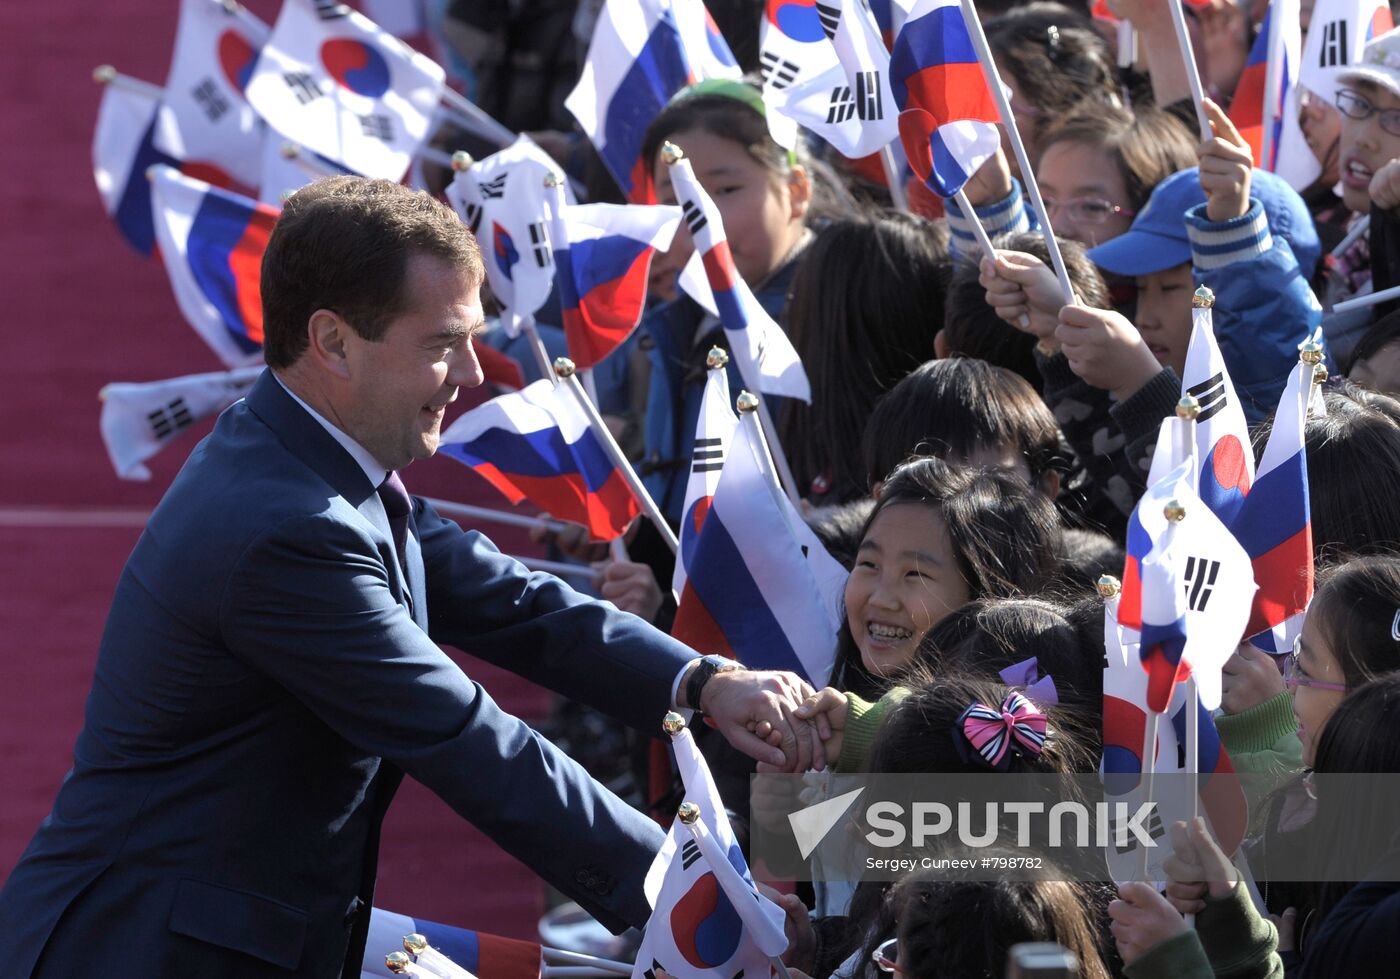 Dmitry Medvedev's official visit to Republic of Korea